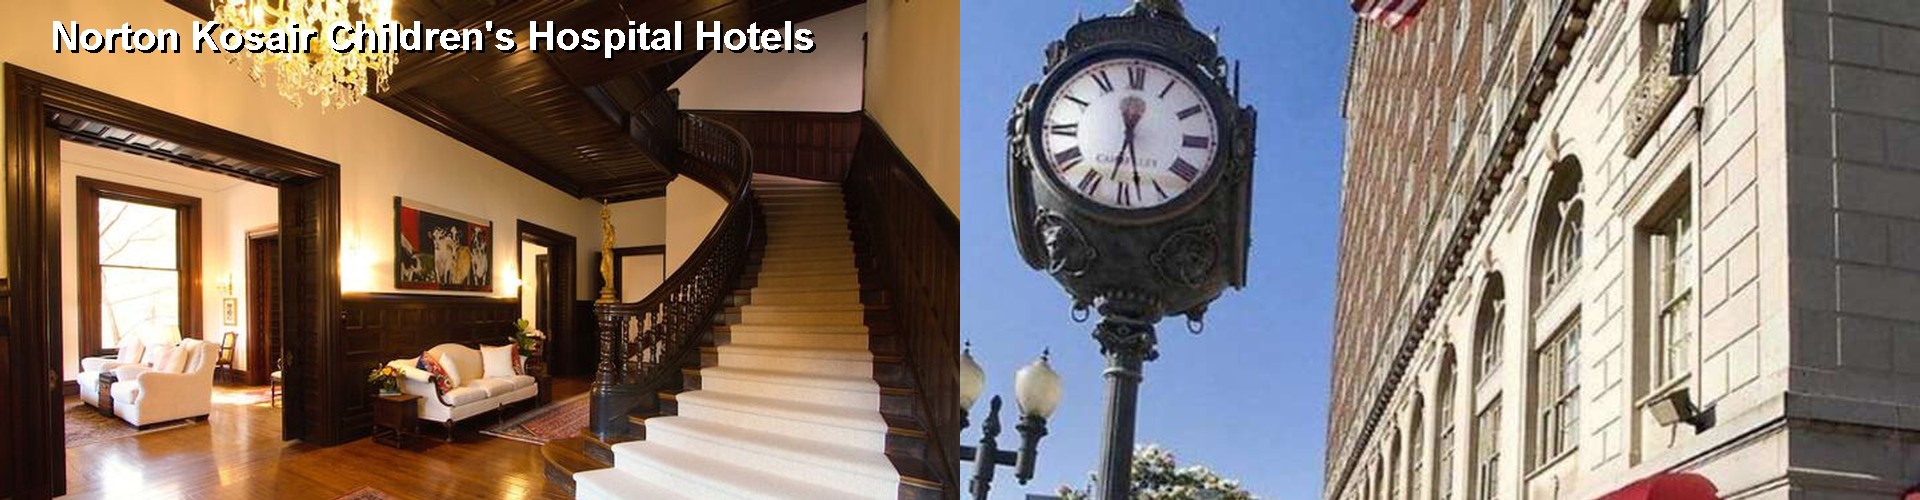 5 Best Hotels near Norton Kosair Children's Hospital